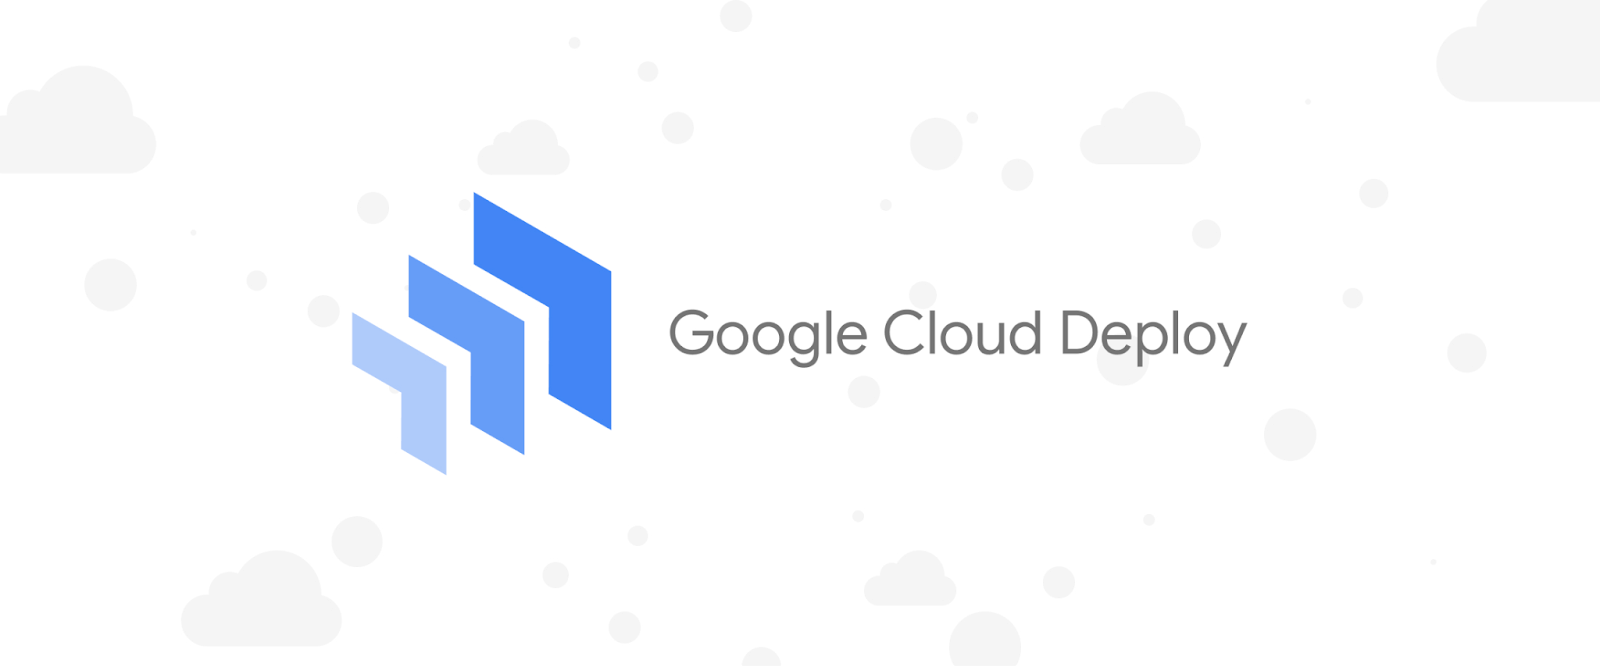 Google Cloud Deploy